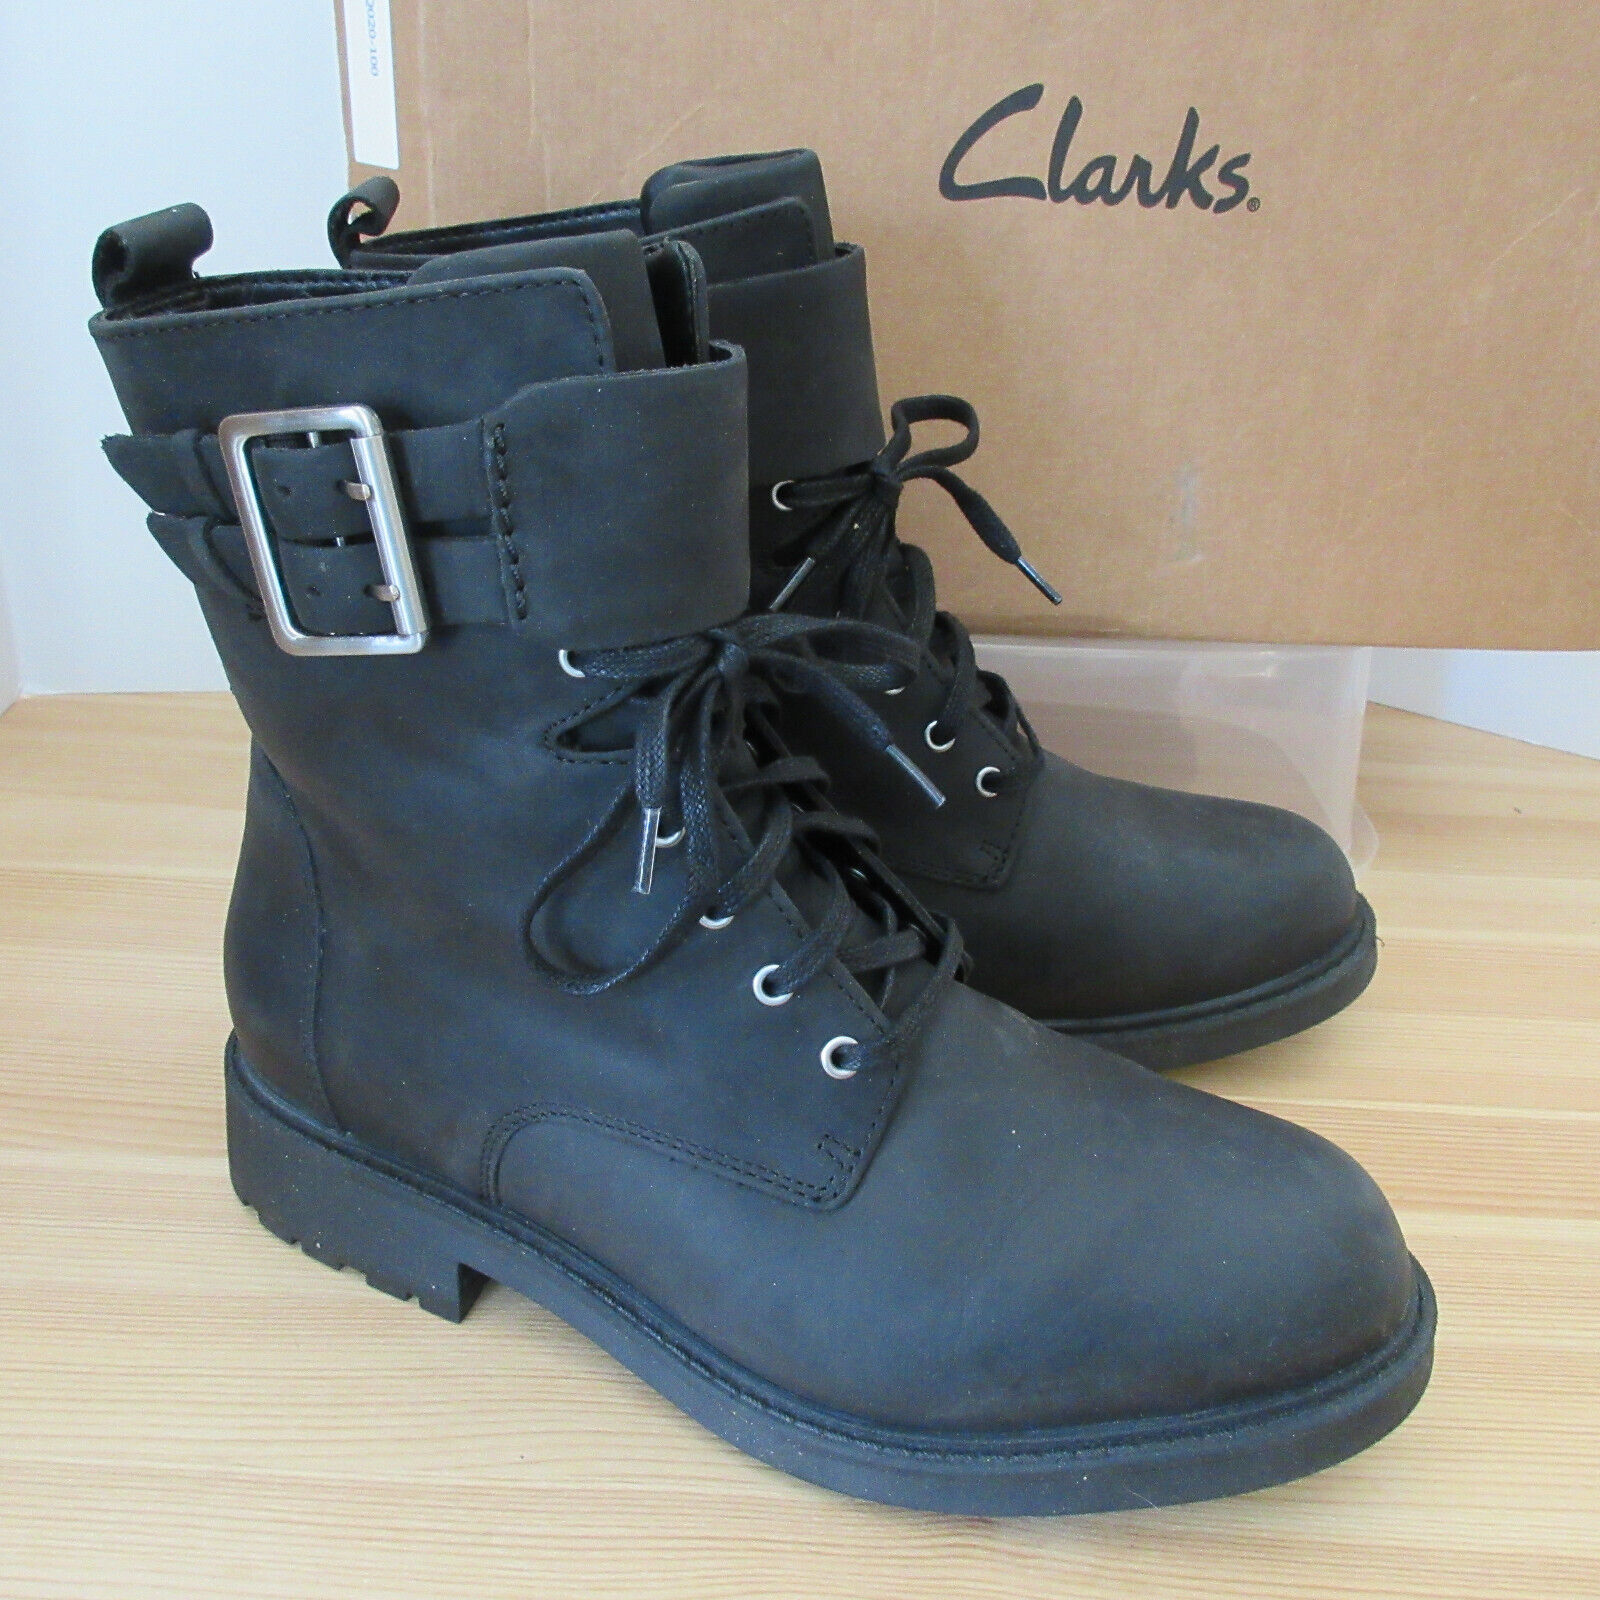 Praten Neem de telefoon op diep Clarks Orinoco 2 Womens 8 W WIDE WIDTH Black Leather Combat Boots Fleece  Lined | eBay